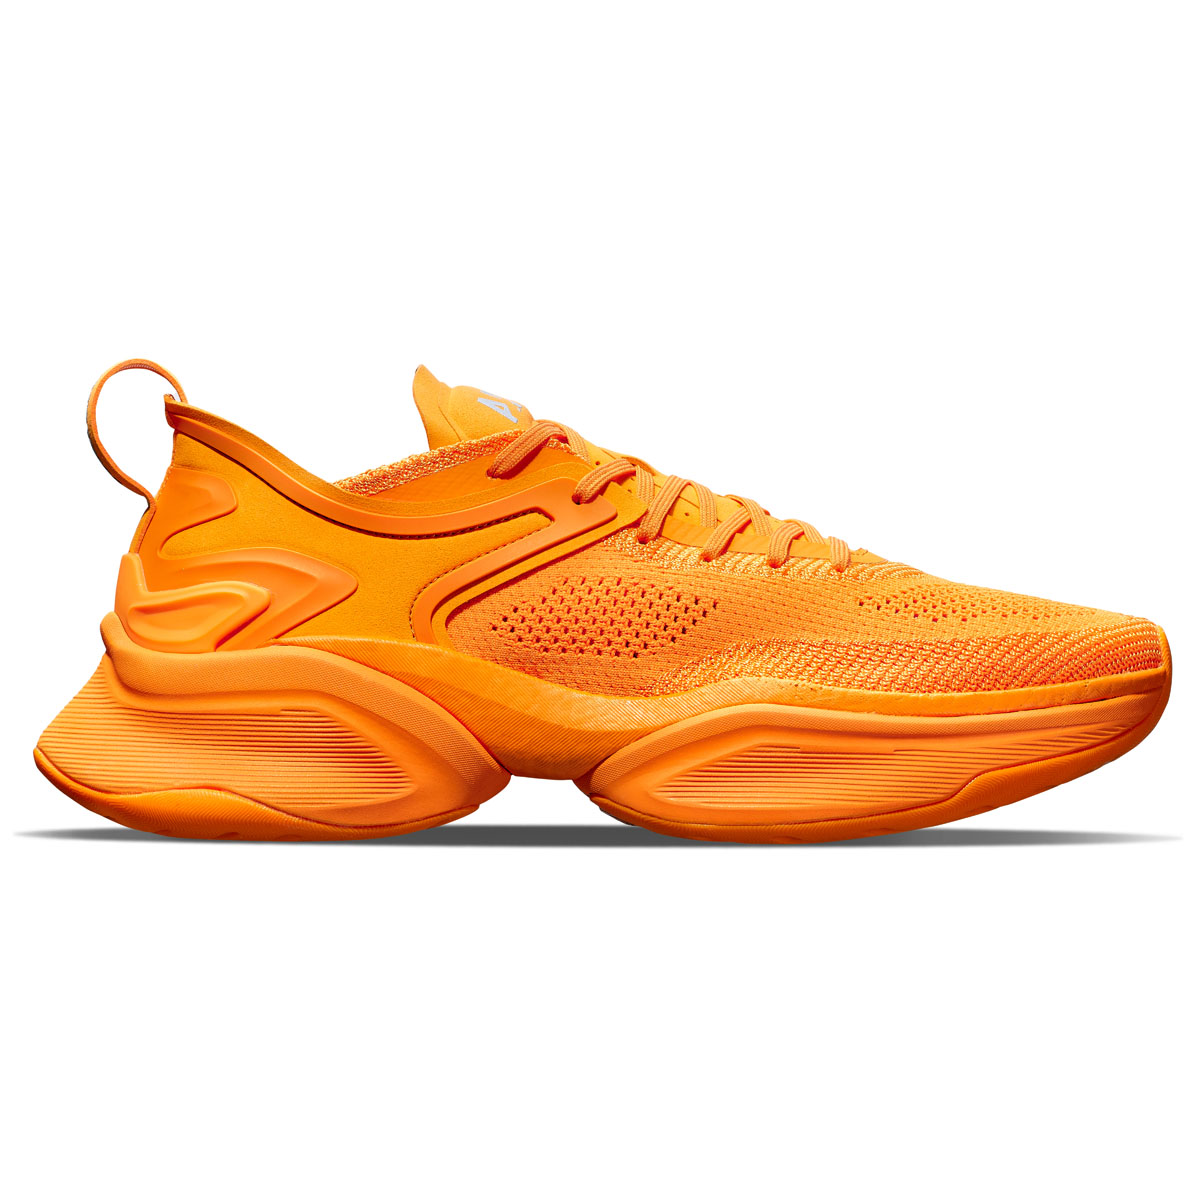 apl mclaren hyspeed shoe in mclaren orange